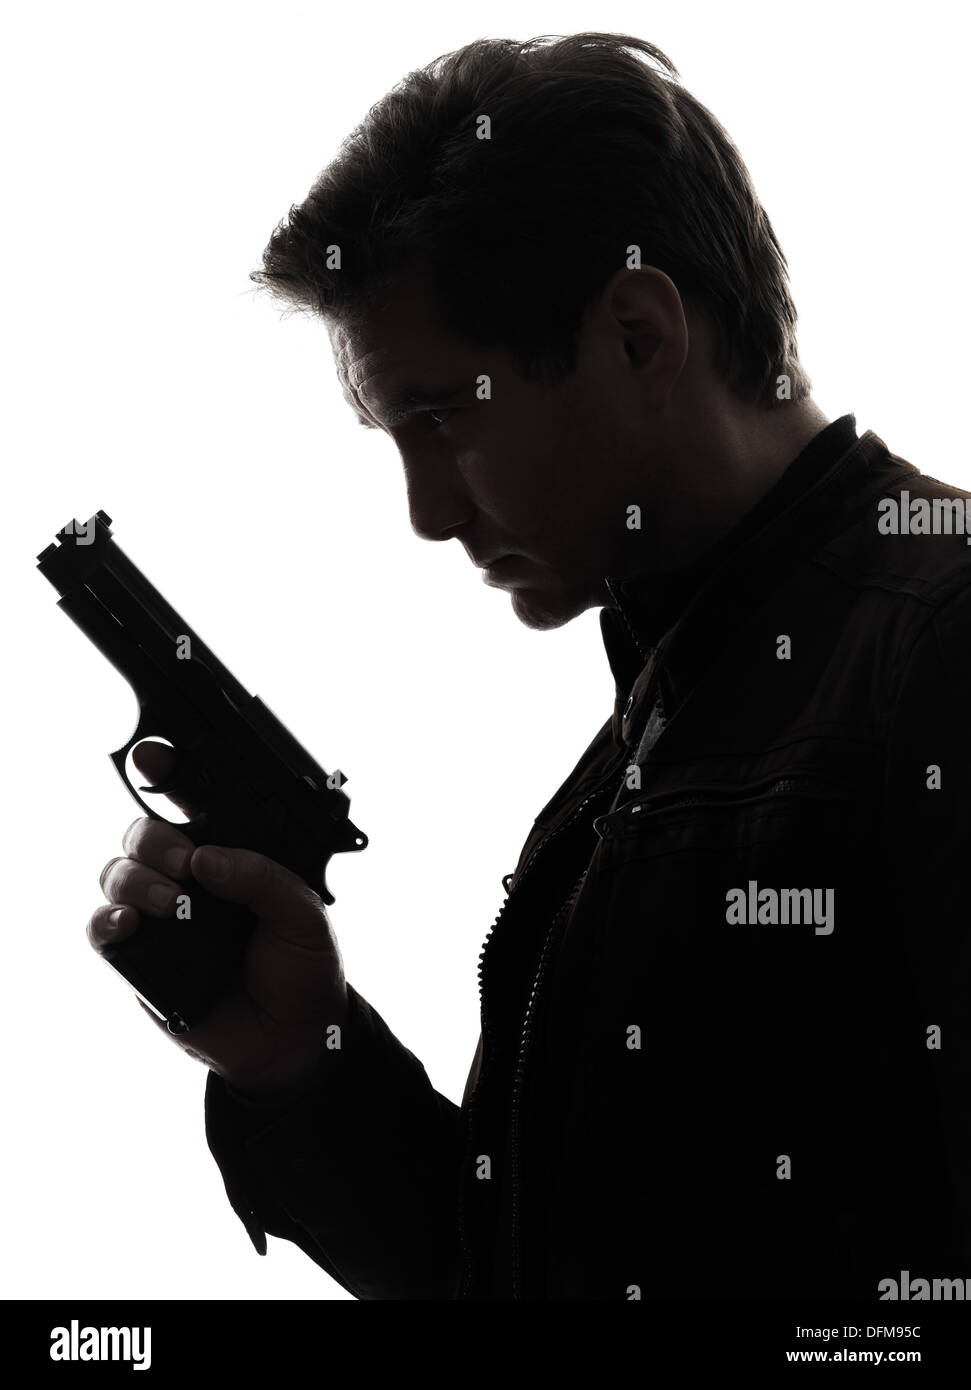 one man killer policeman holding gun portrait silhouette studio white background Stock Photo